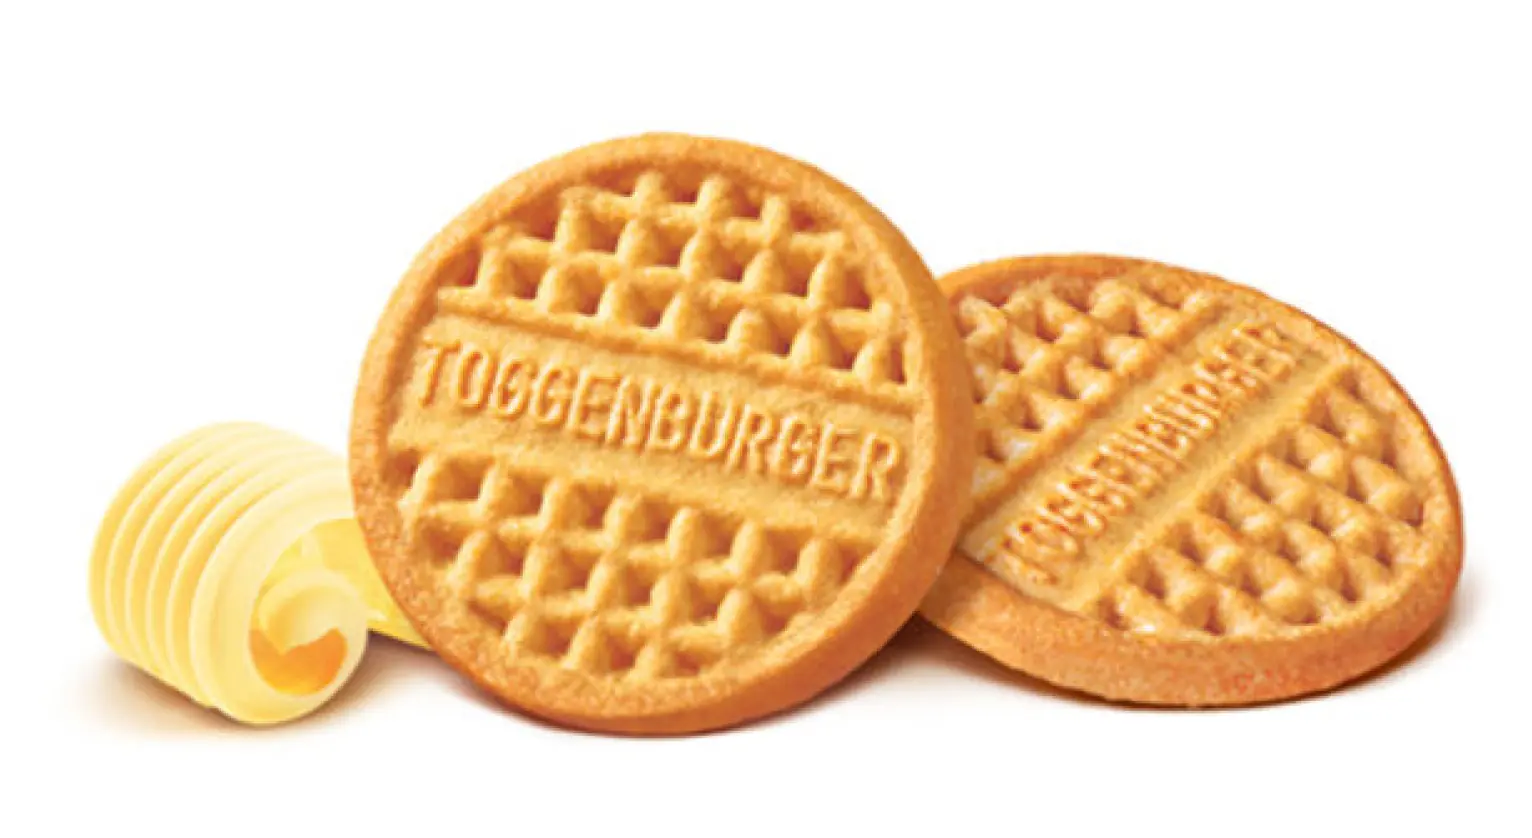 Kägi Toggenburger Biscuits au beurre